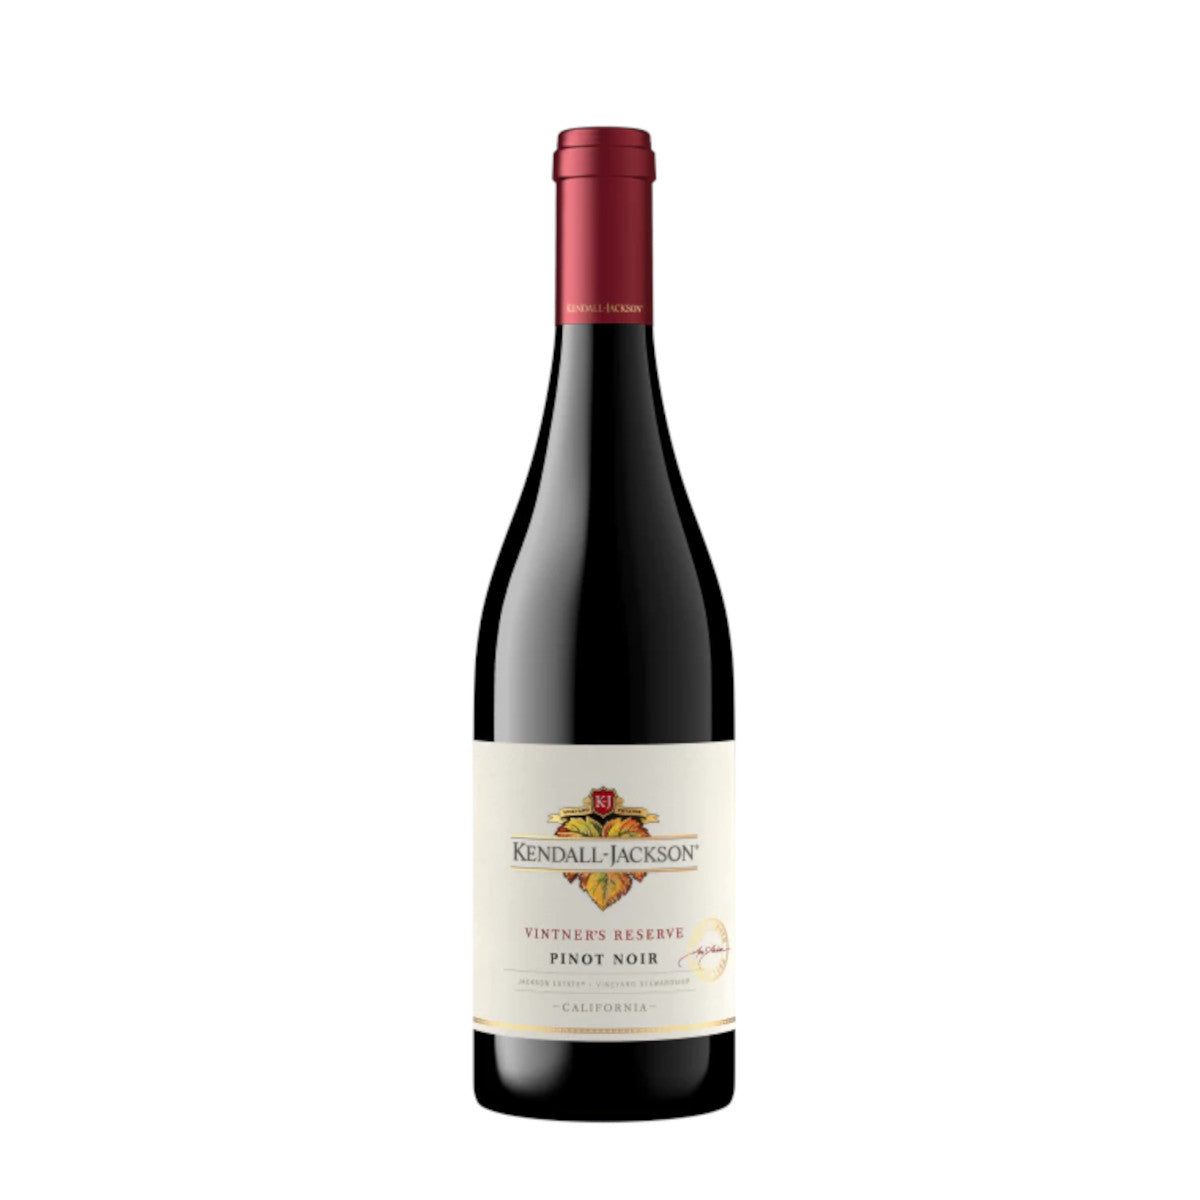 Kendall-Jackson, Vintner's Reserve Pinot Noir